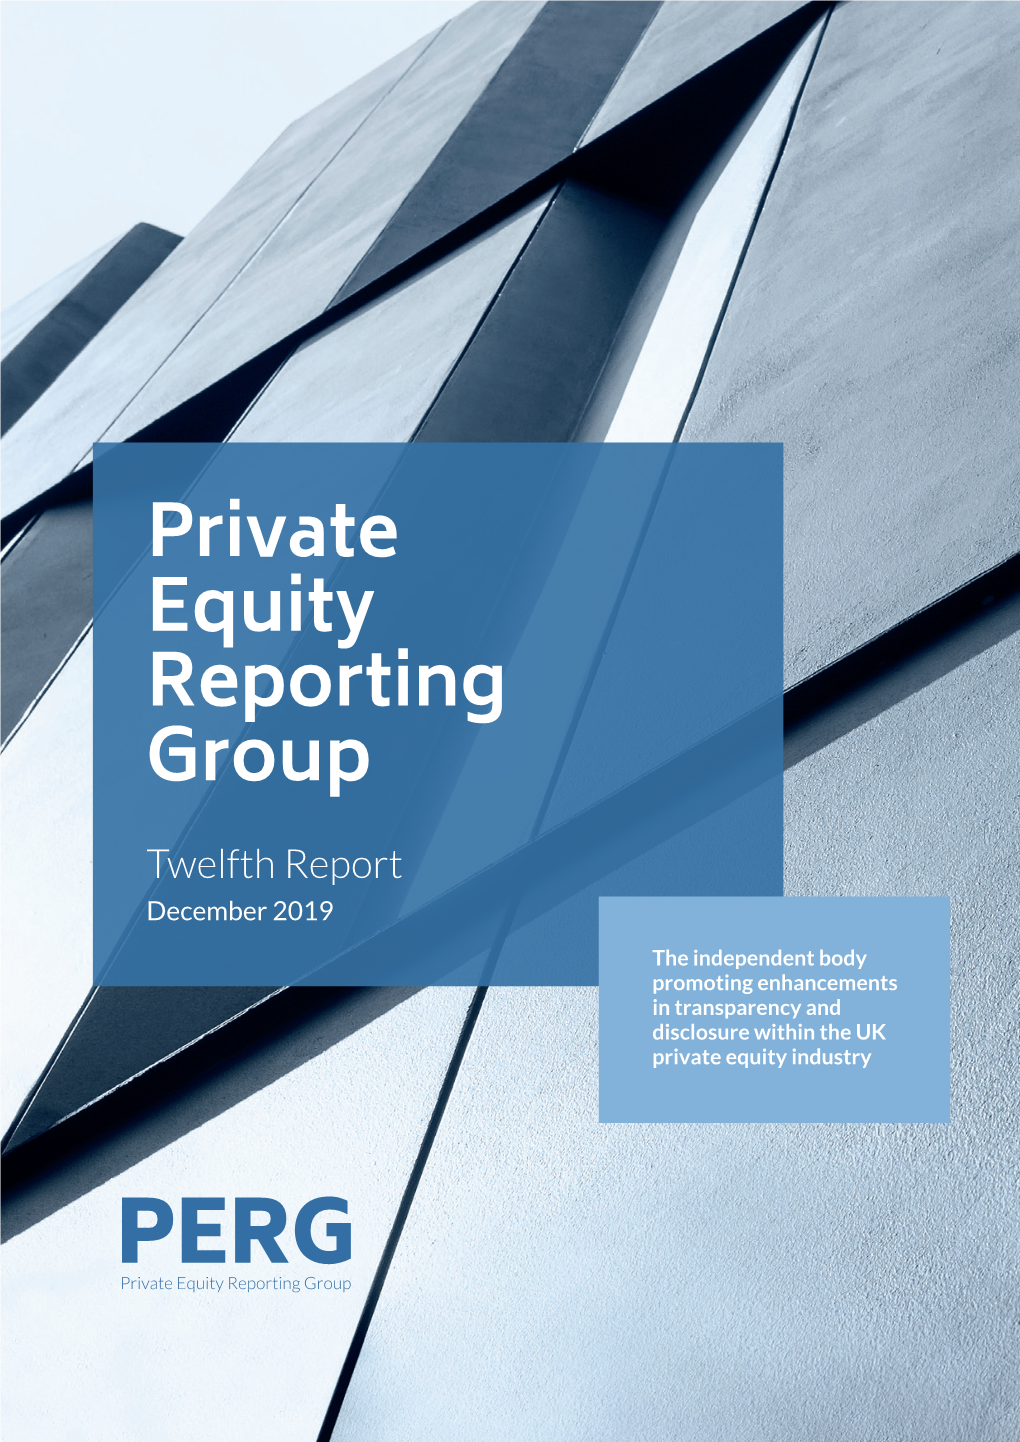 Annual Report, the PERG